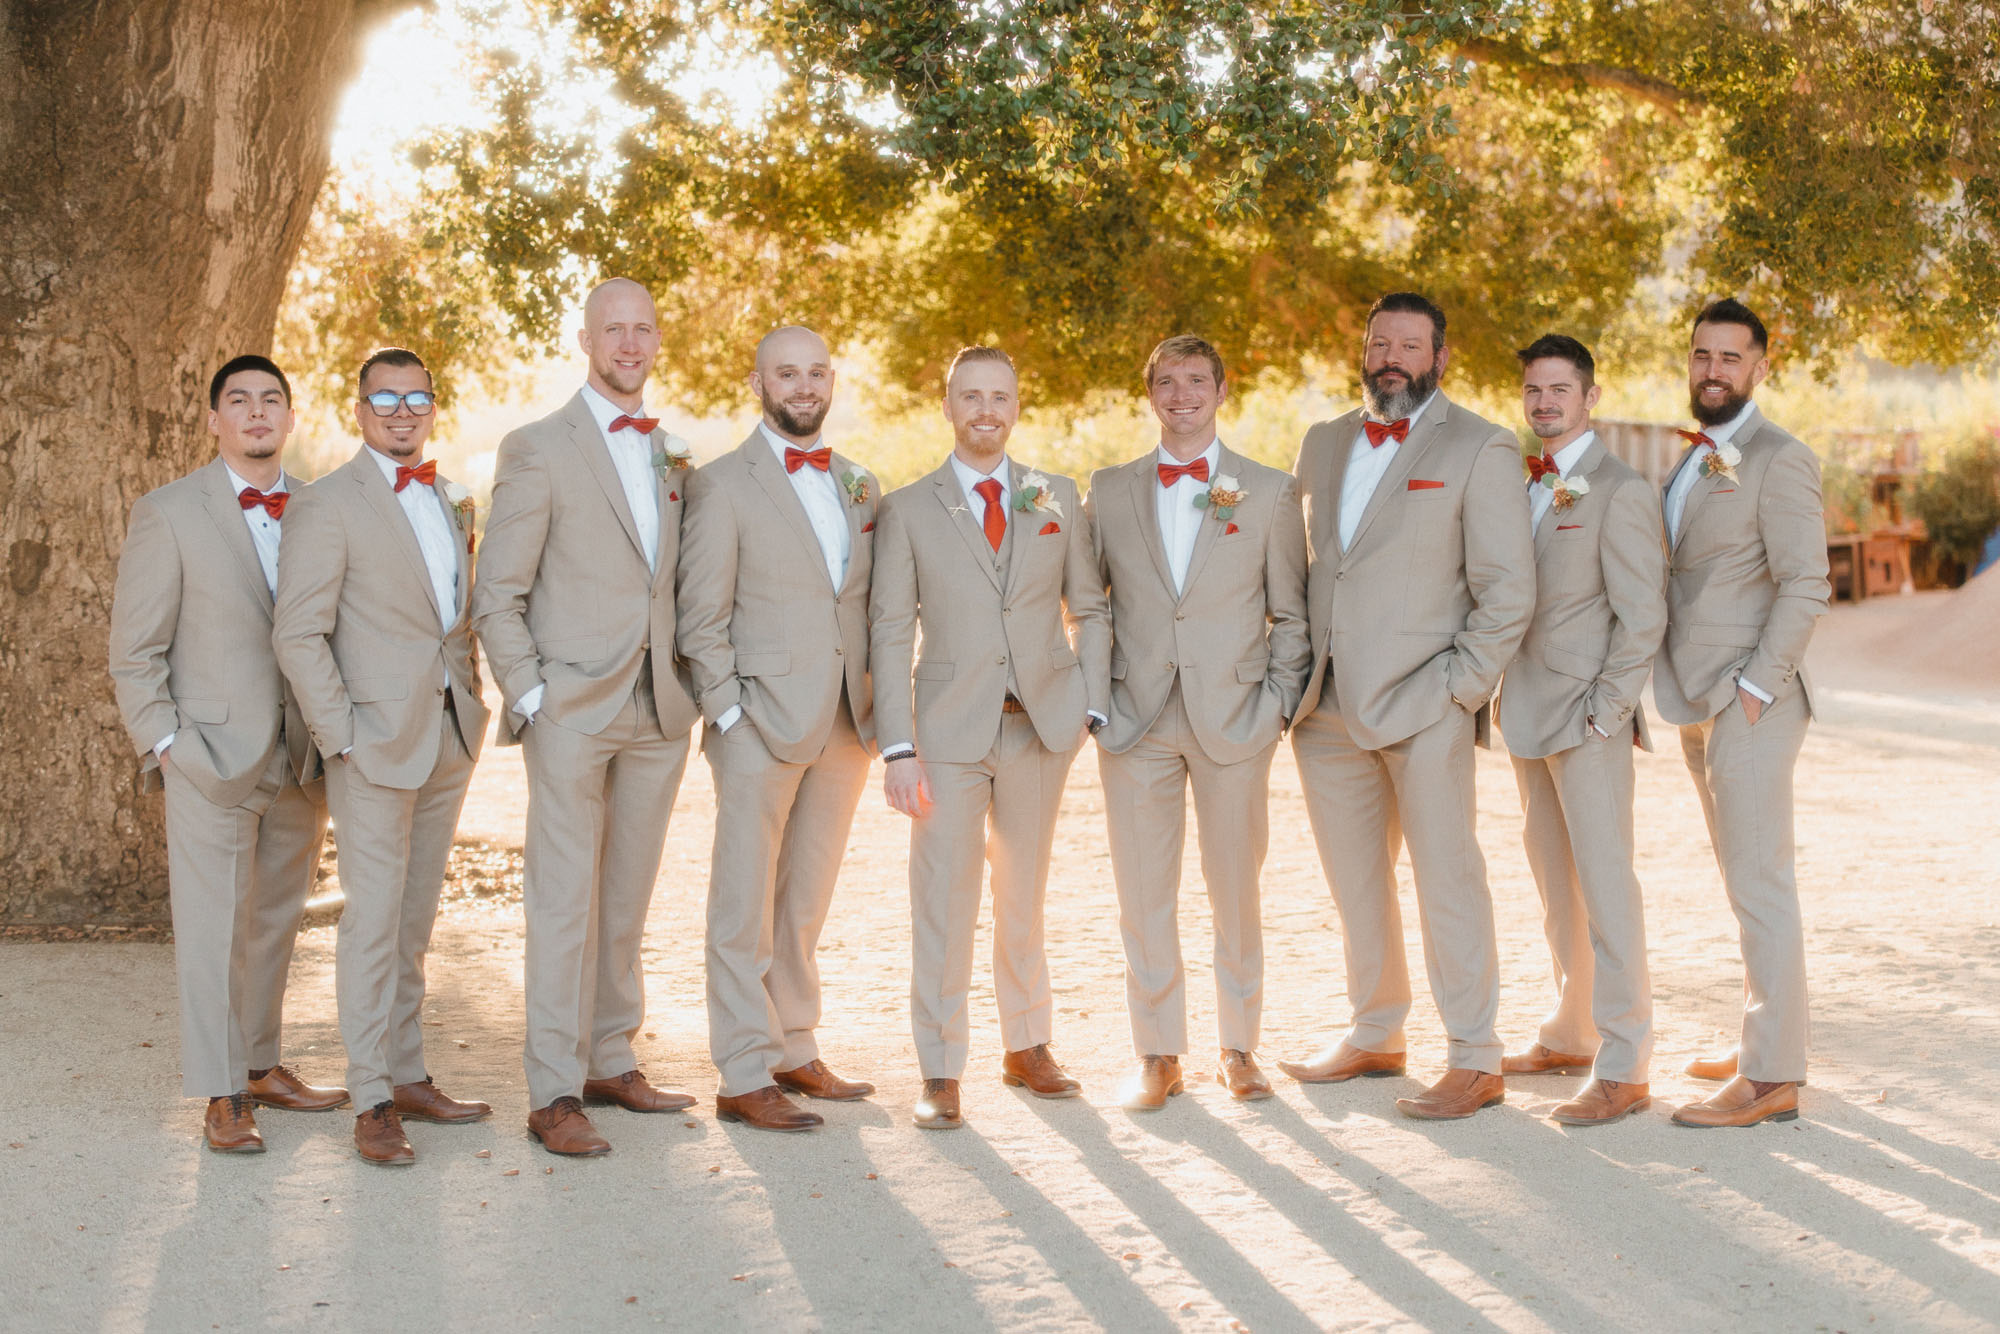 khaki suit groomsmen